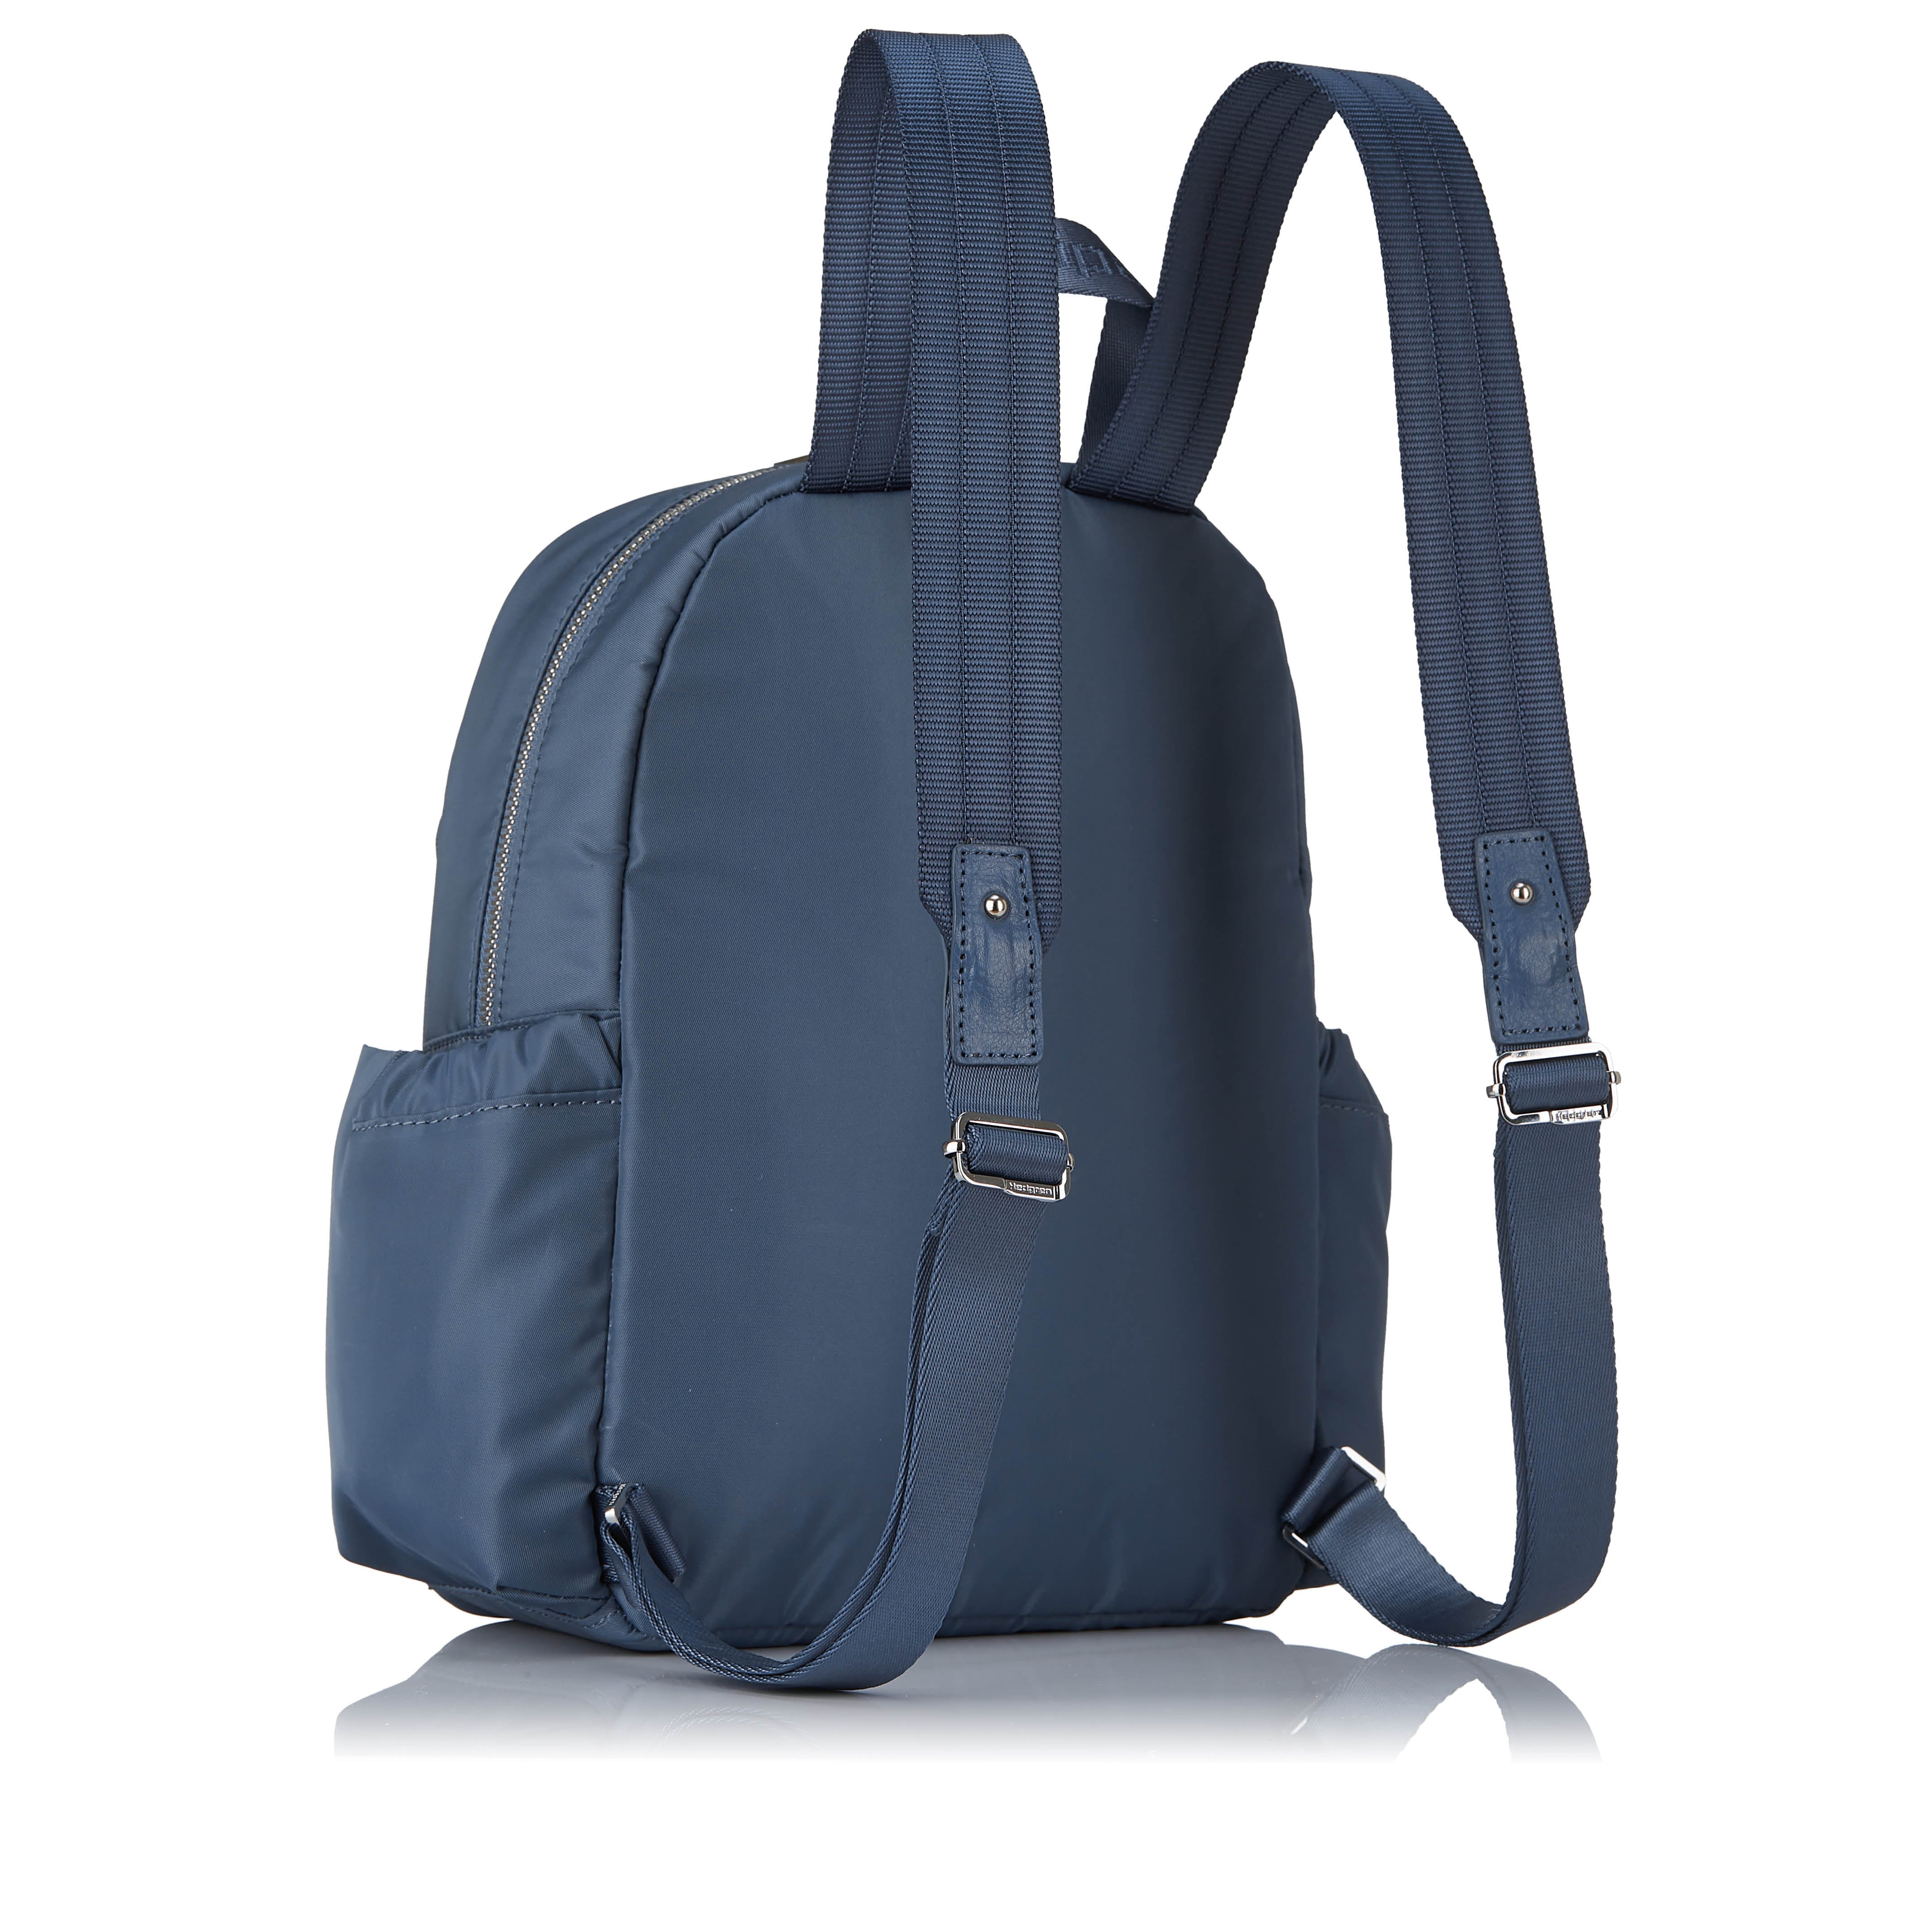 Hedgren Balanced RFID Backpack Baltic Blue